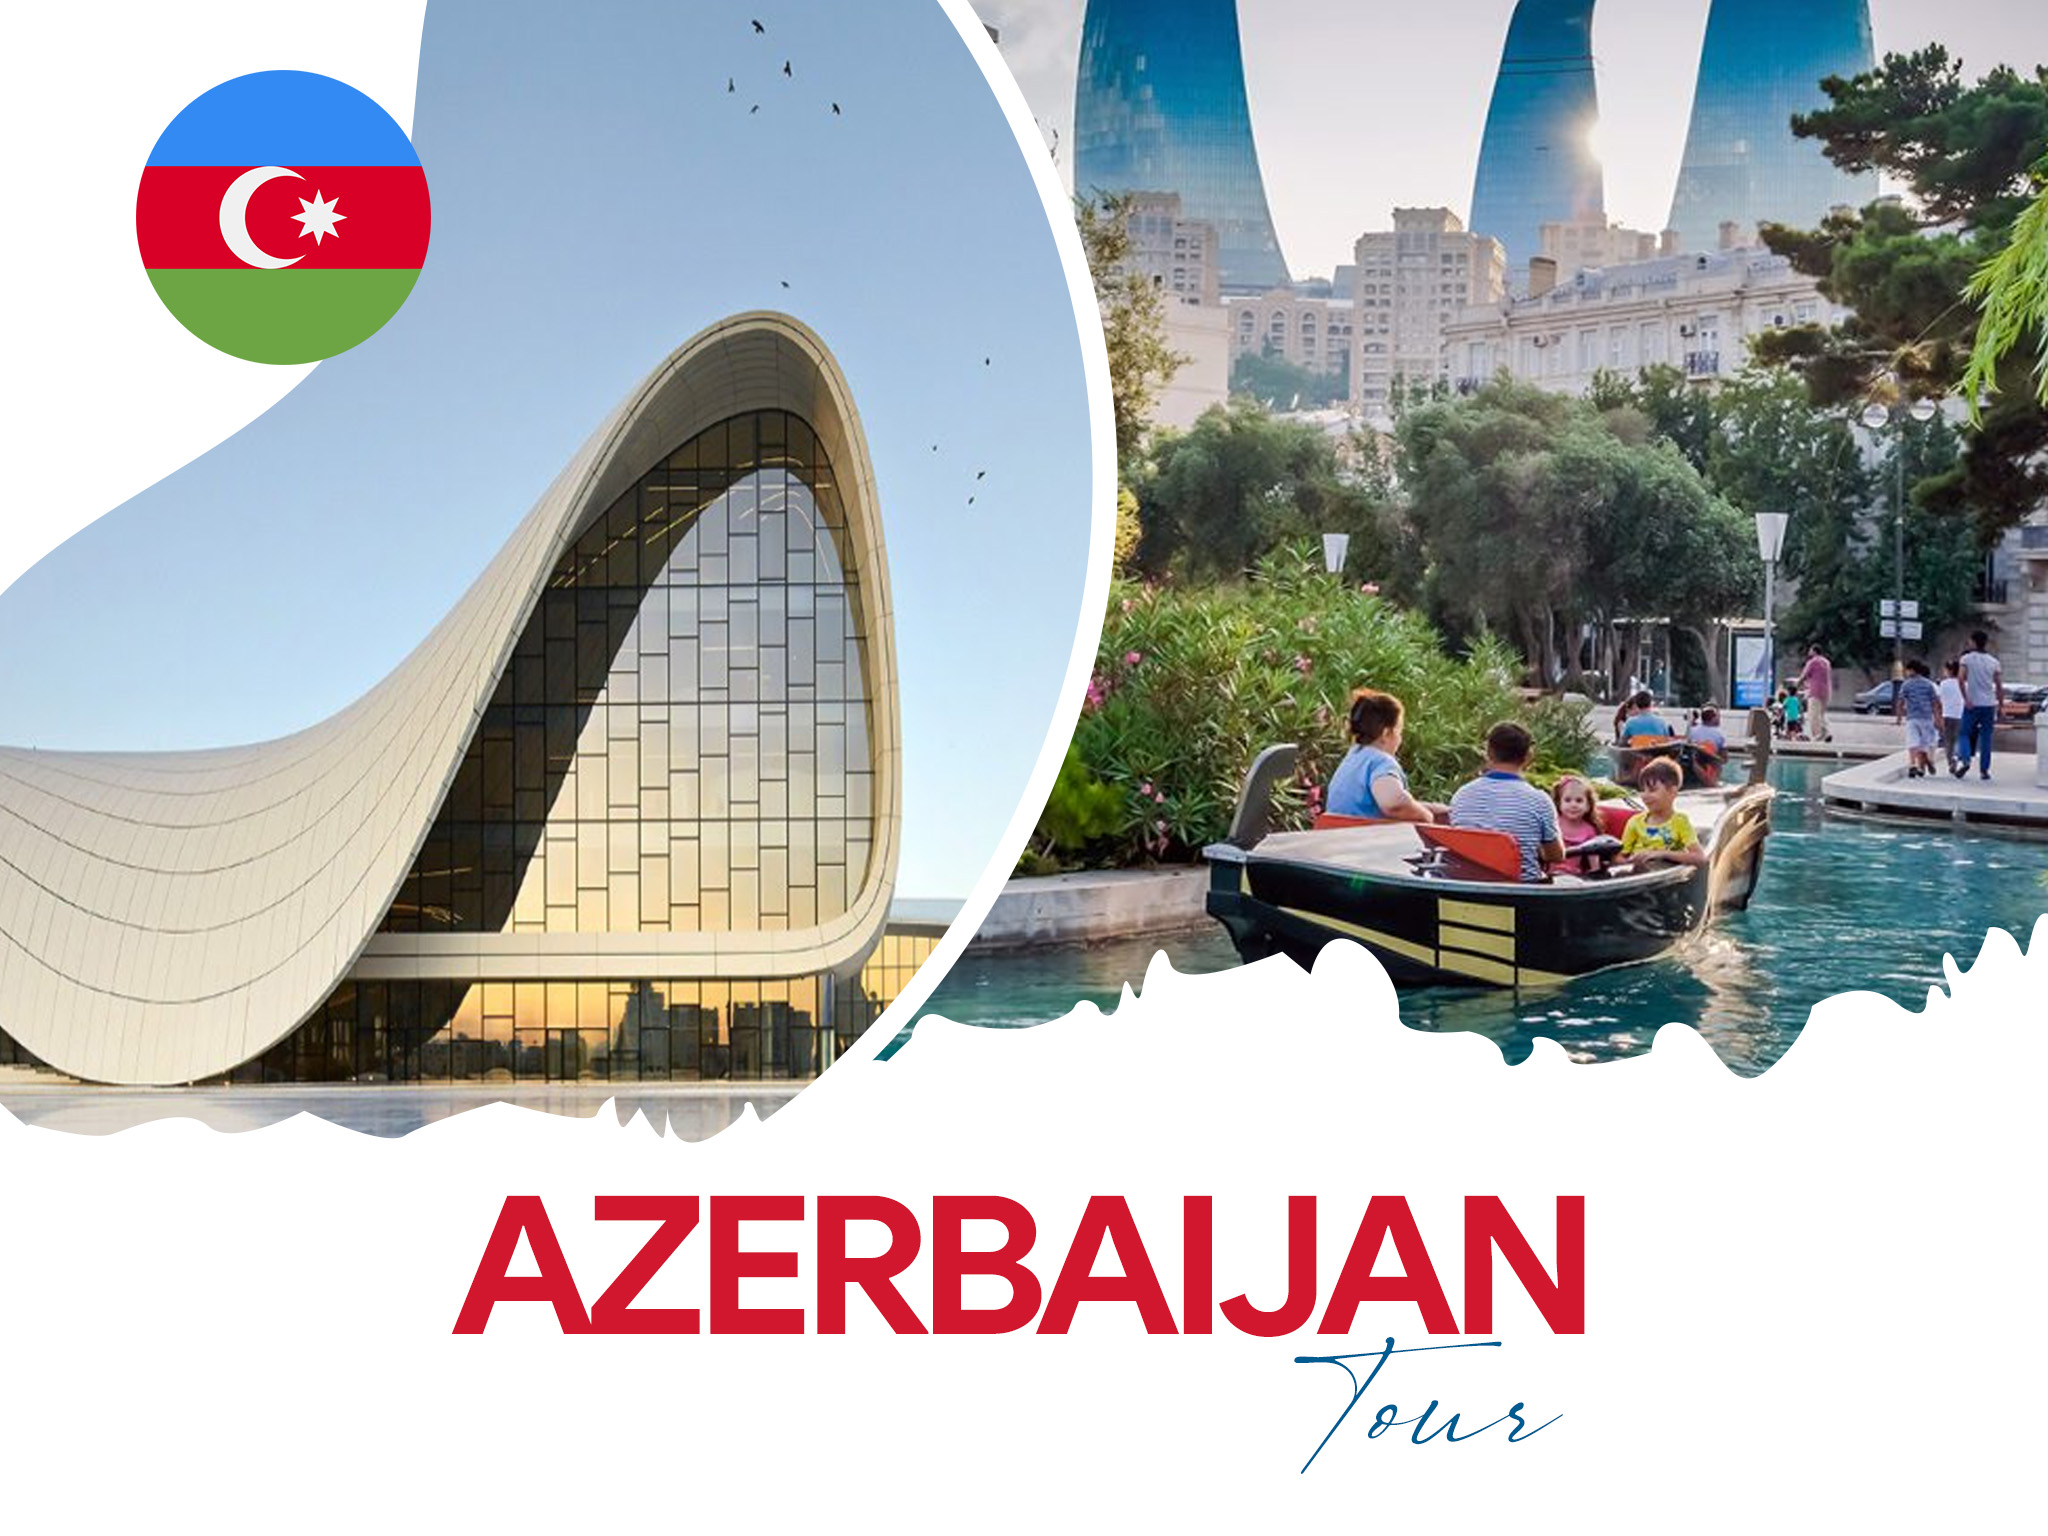 Azerbaijan Tour Package | 4 Days / 3 Nights